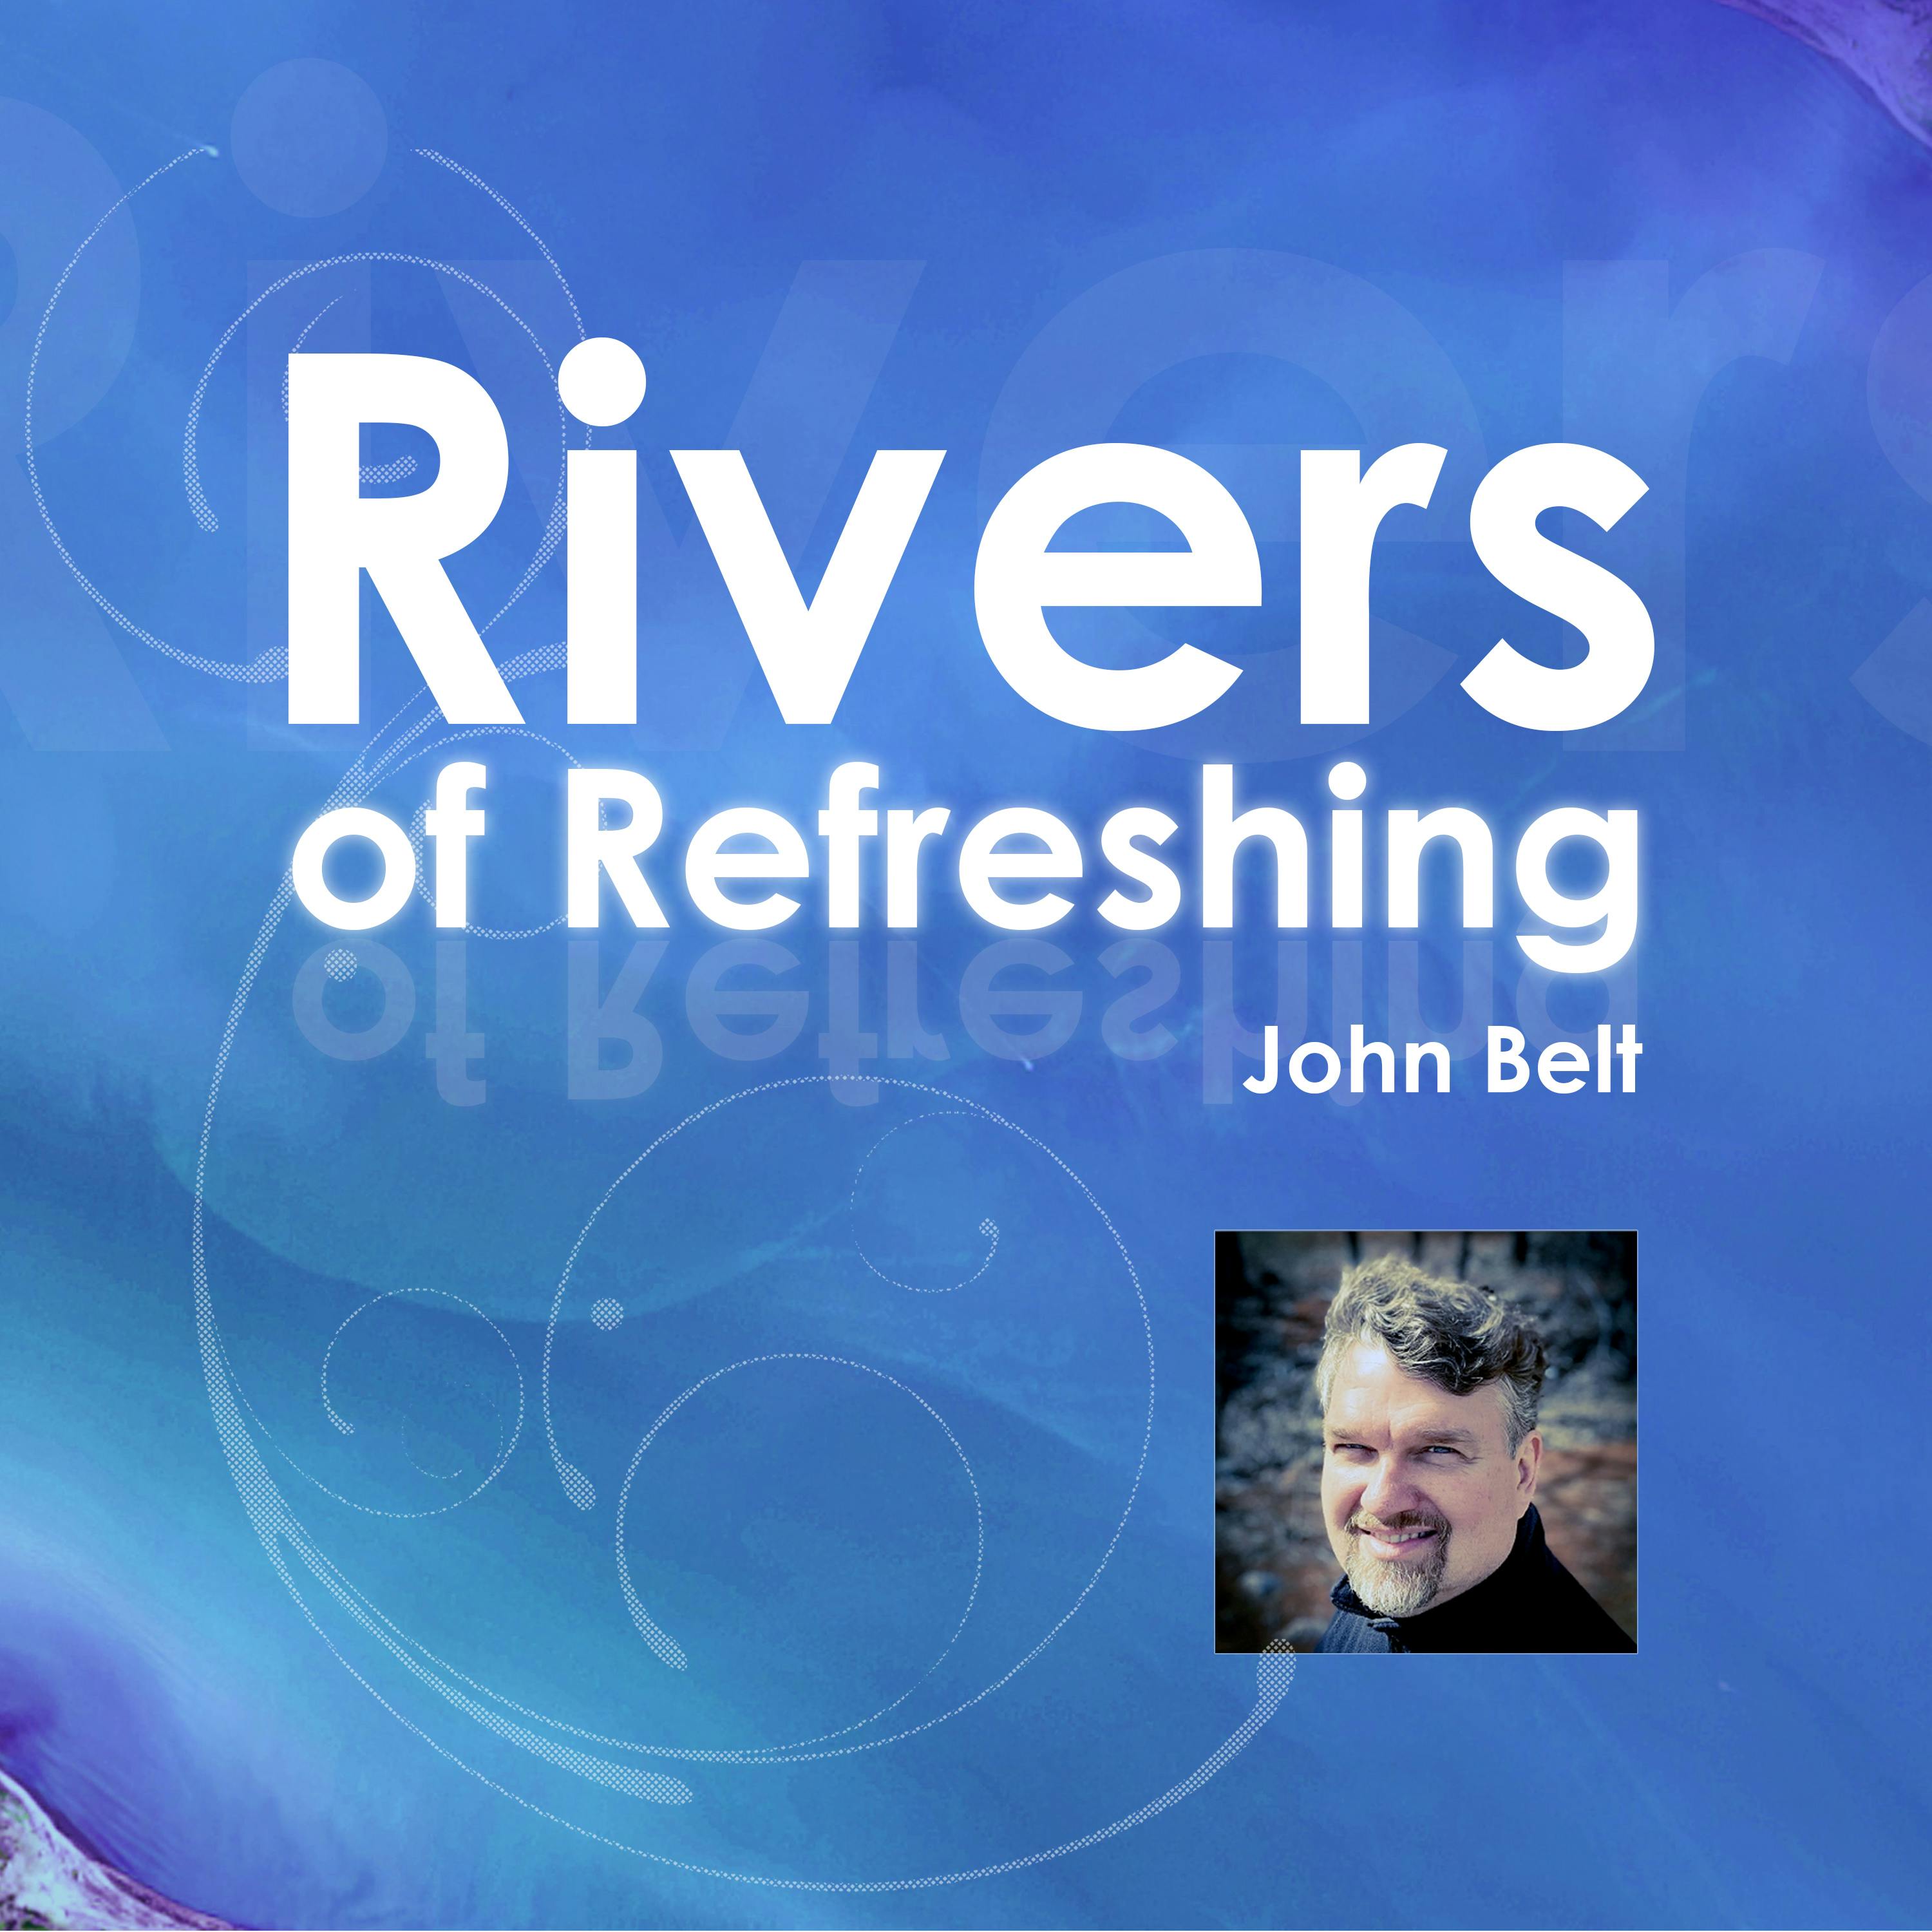 Rivers of Refreshing by John Belt